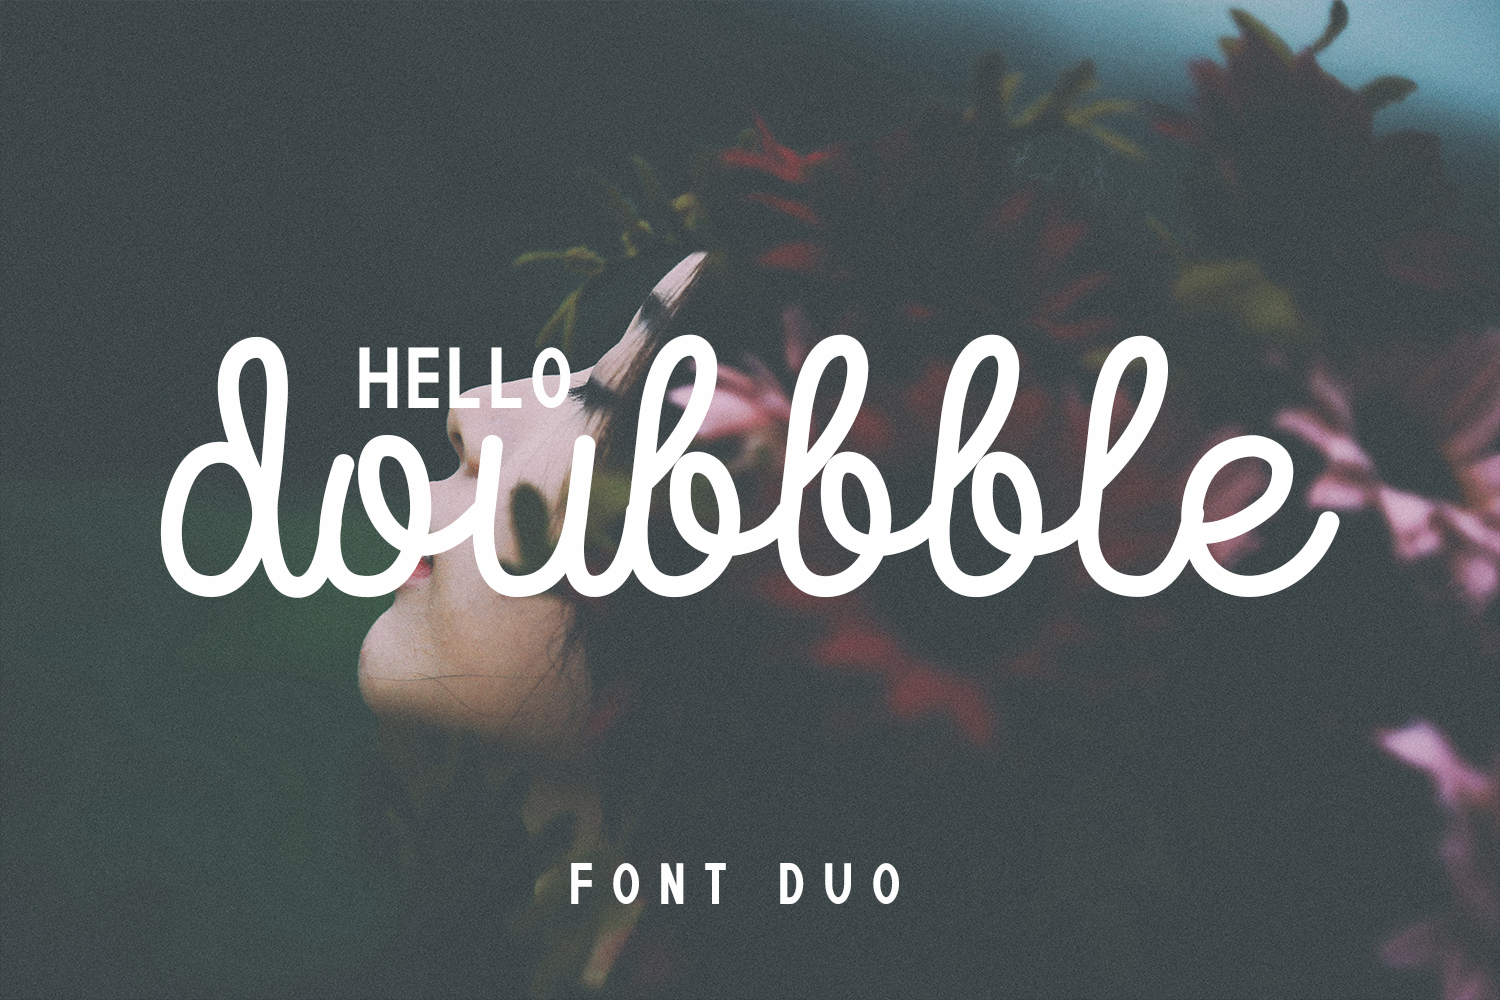 Doubbble Free font